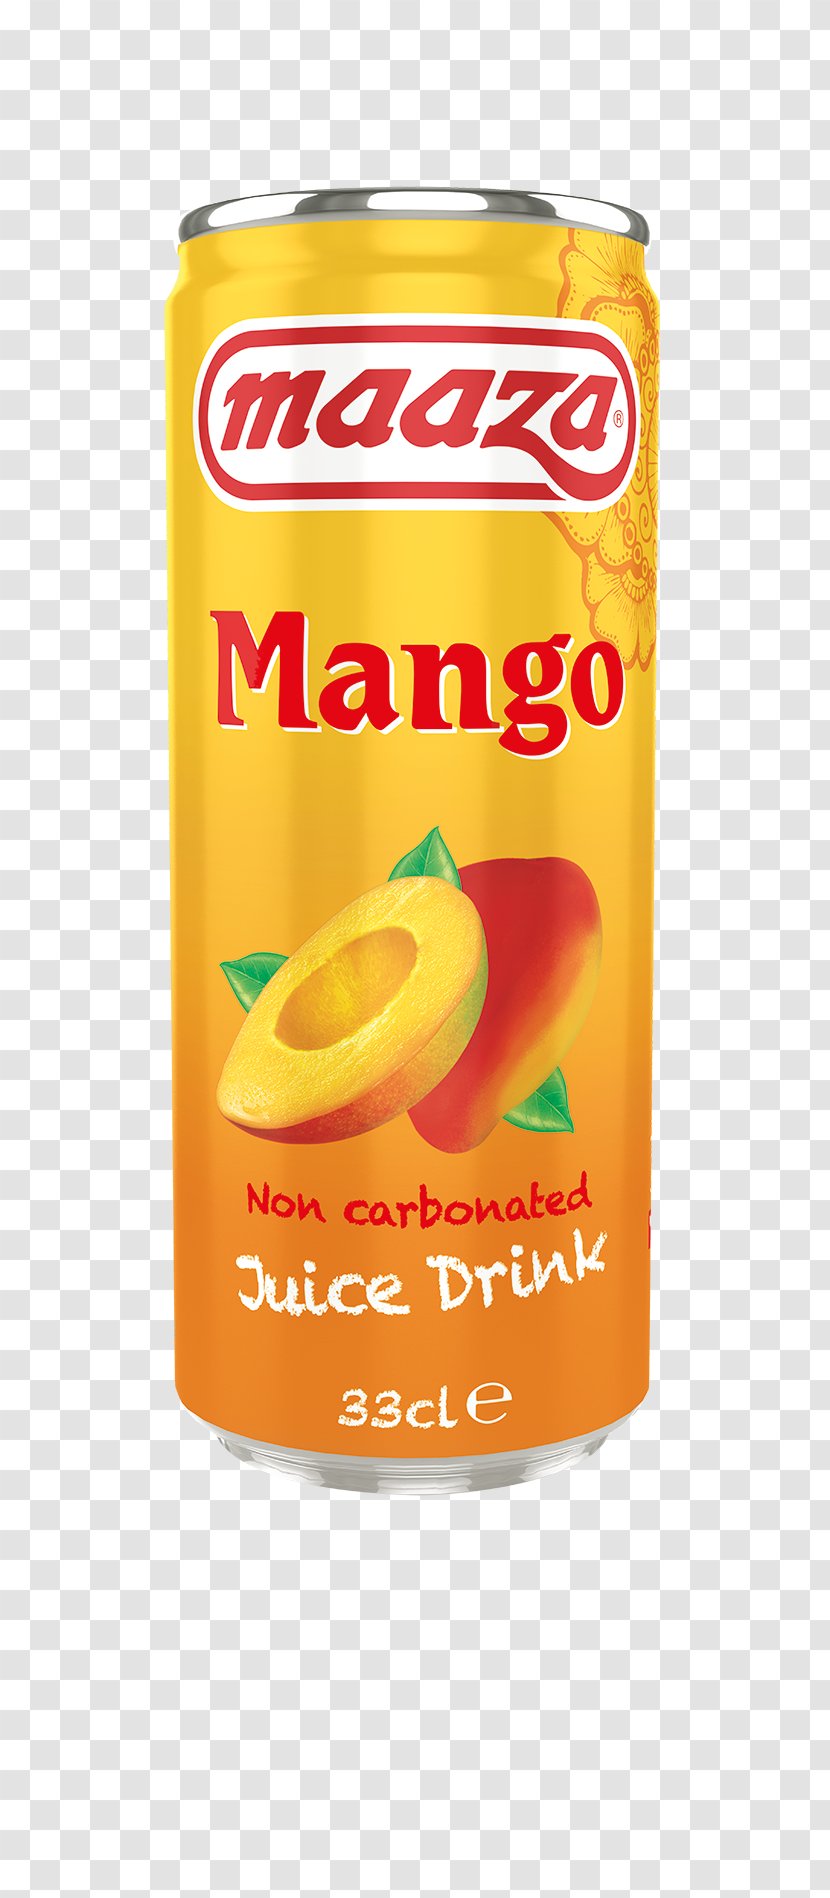 Juice Orange Drink Maaza Mango Beverage Can Transparent PNG